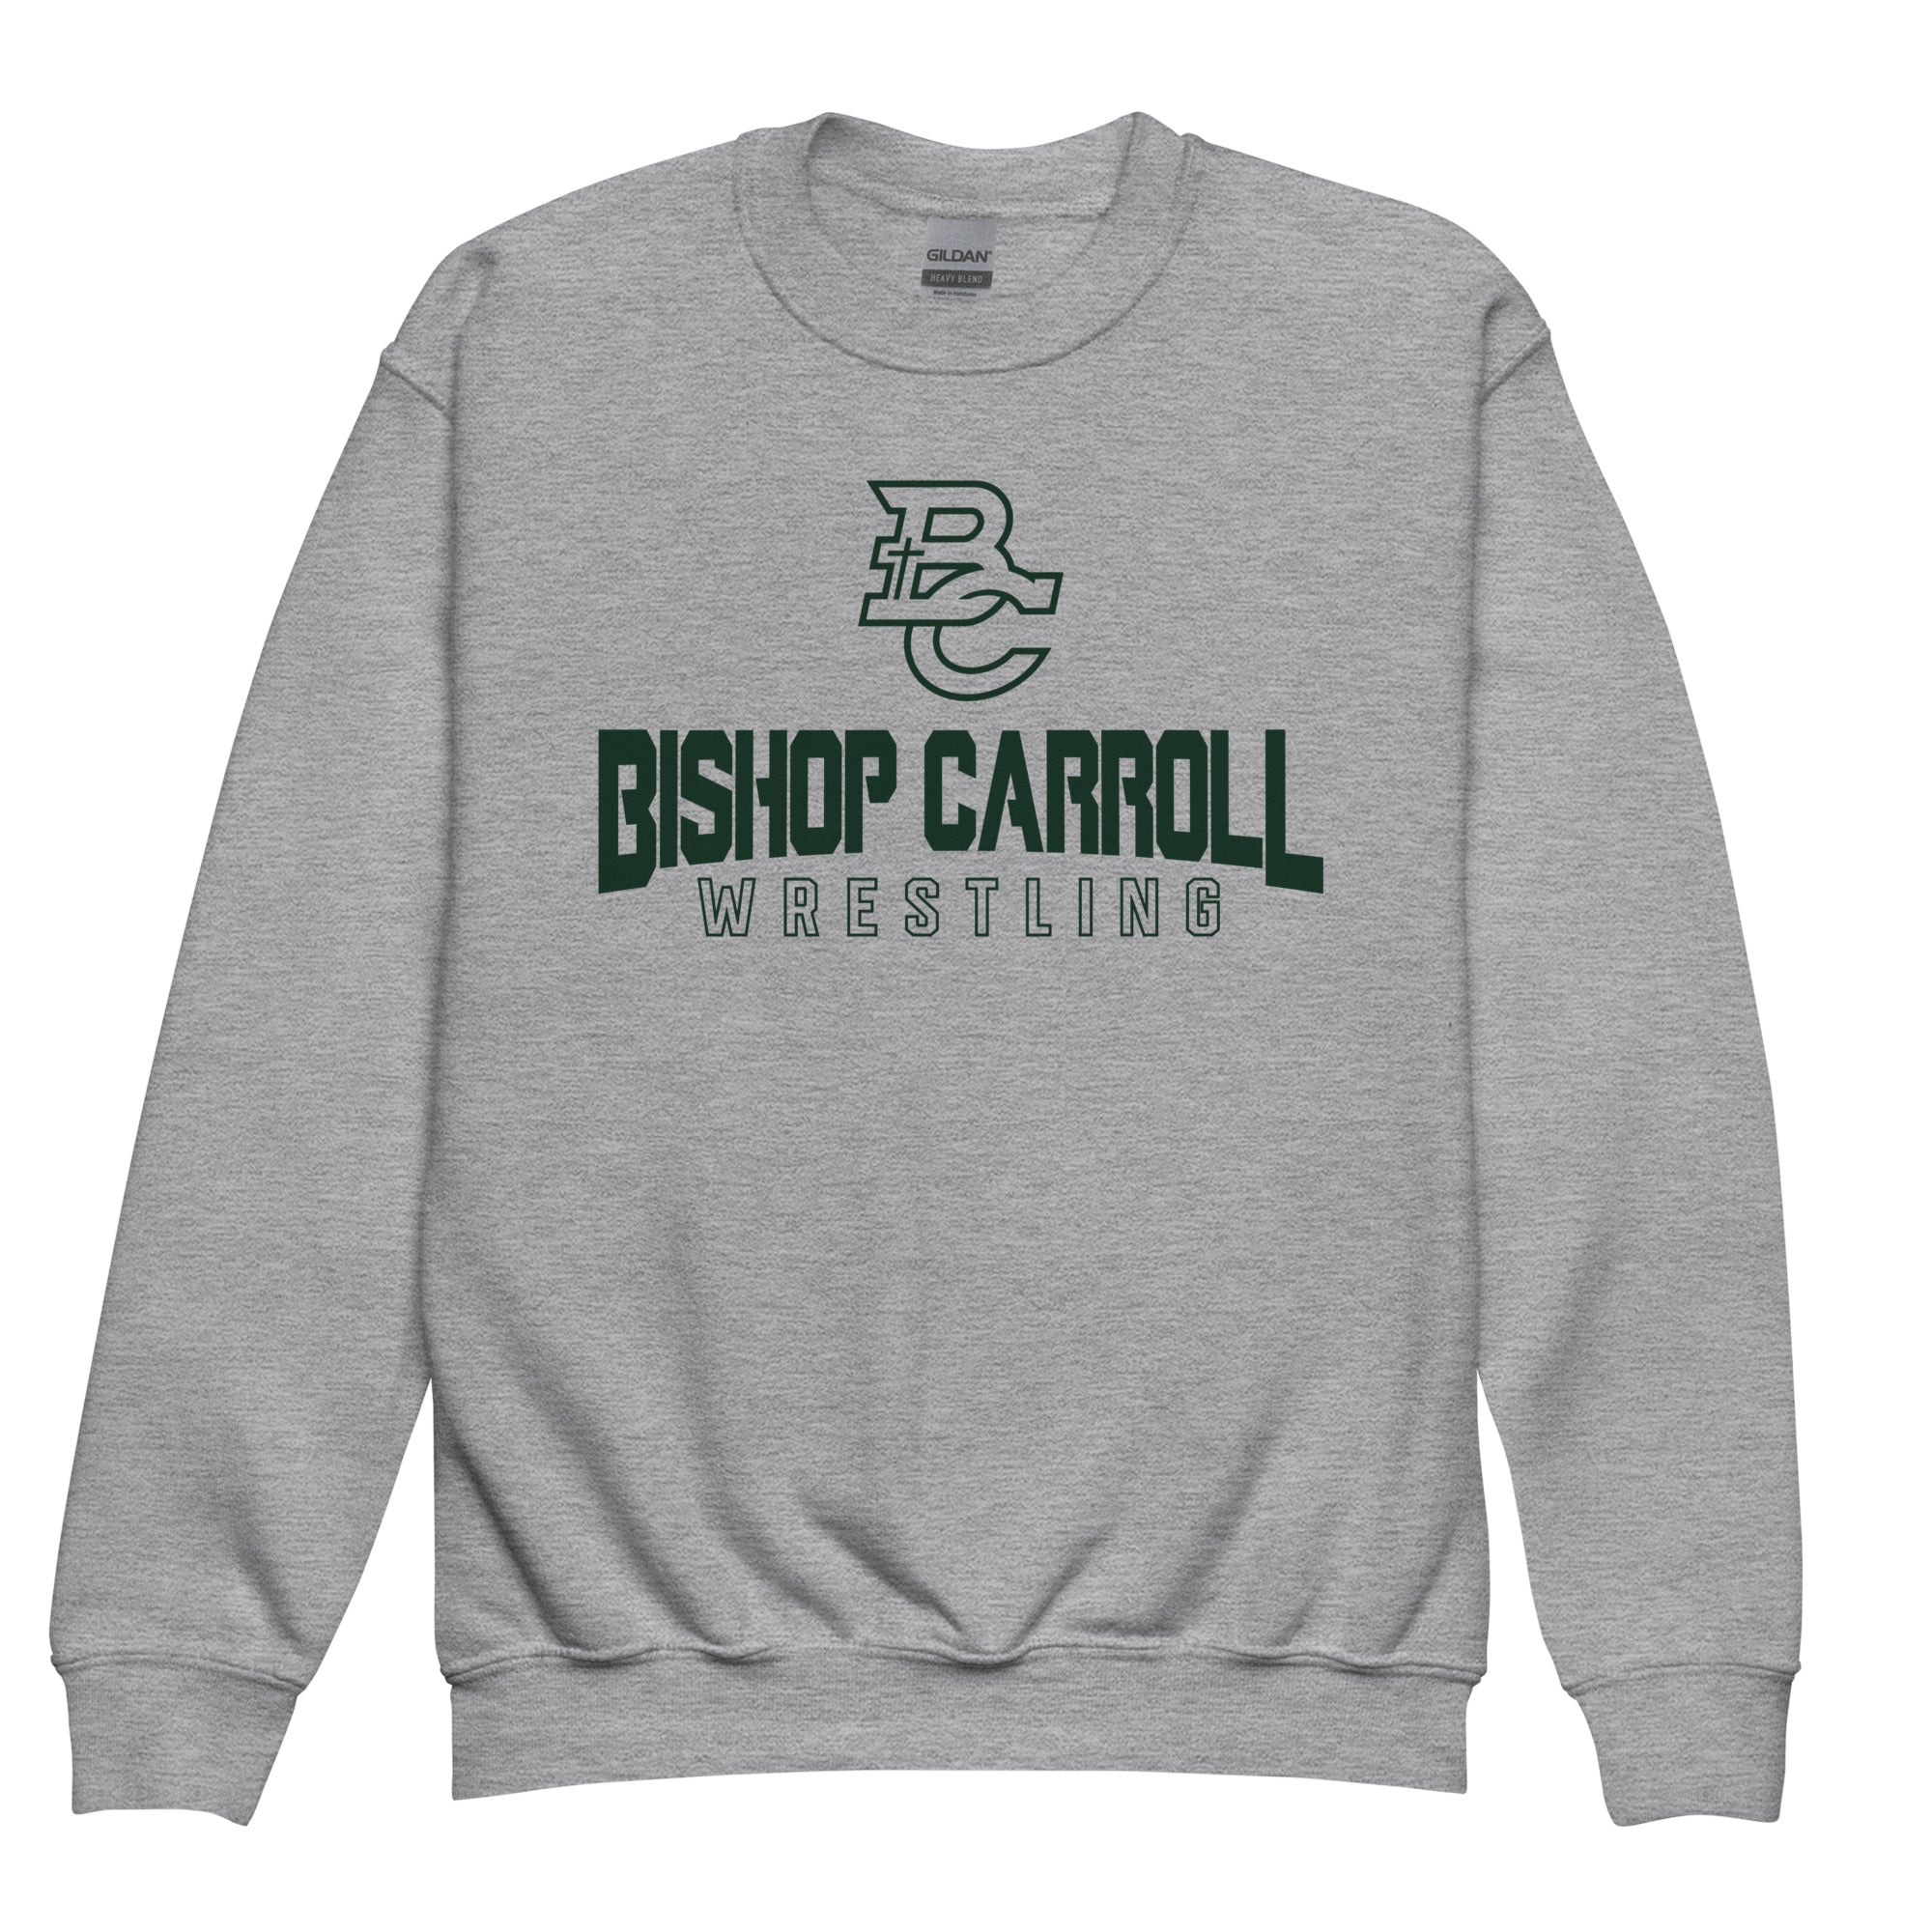 Bishop Carroll Wrestling Youth crewneck sweatshirt